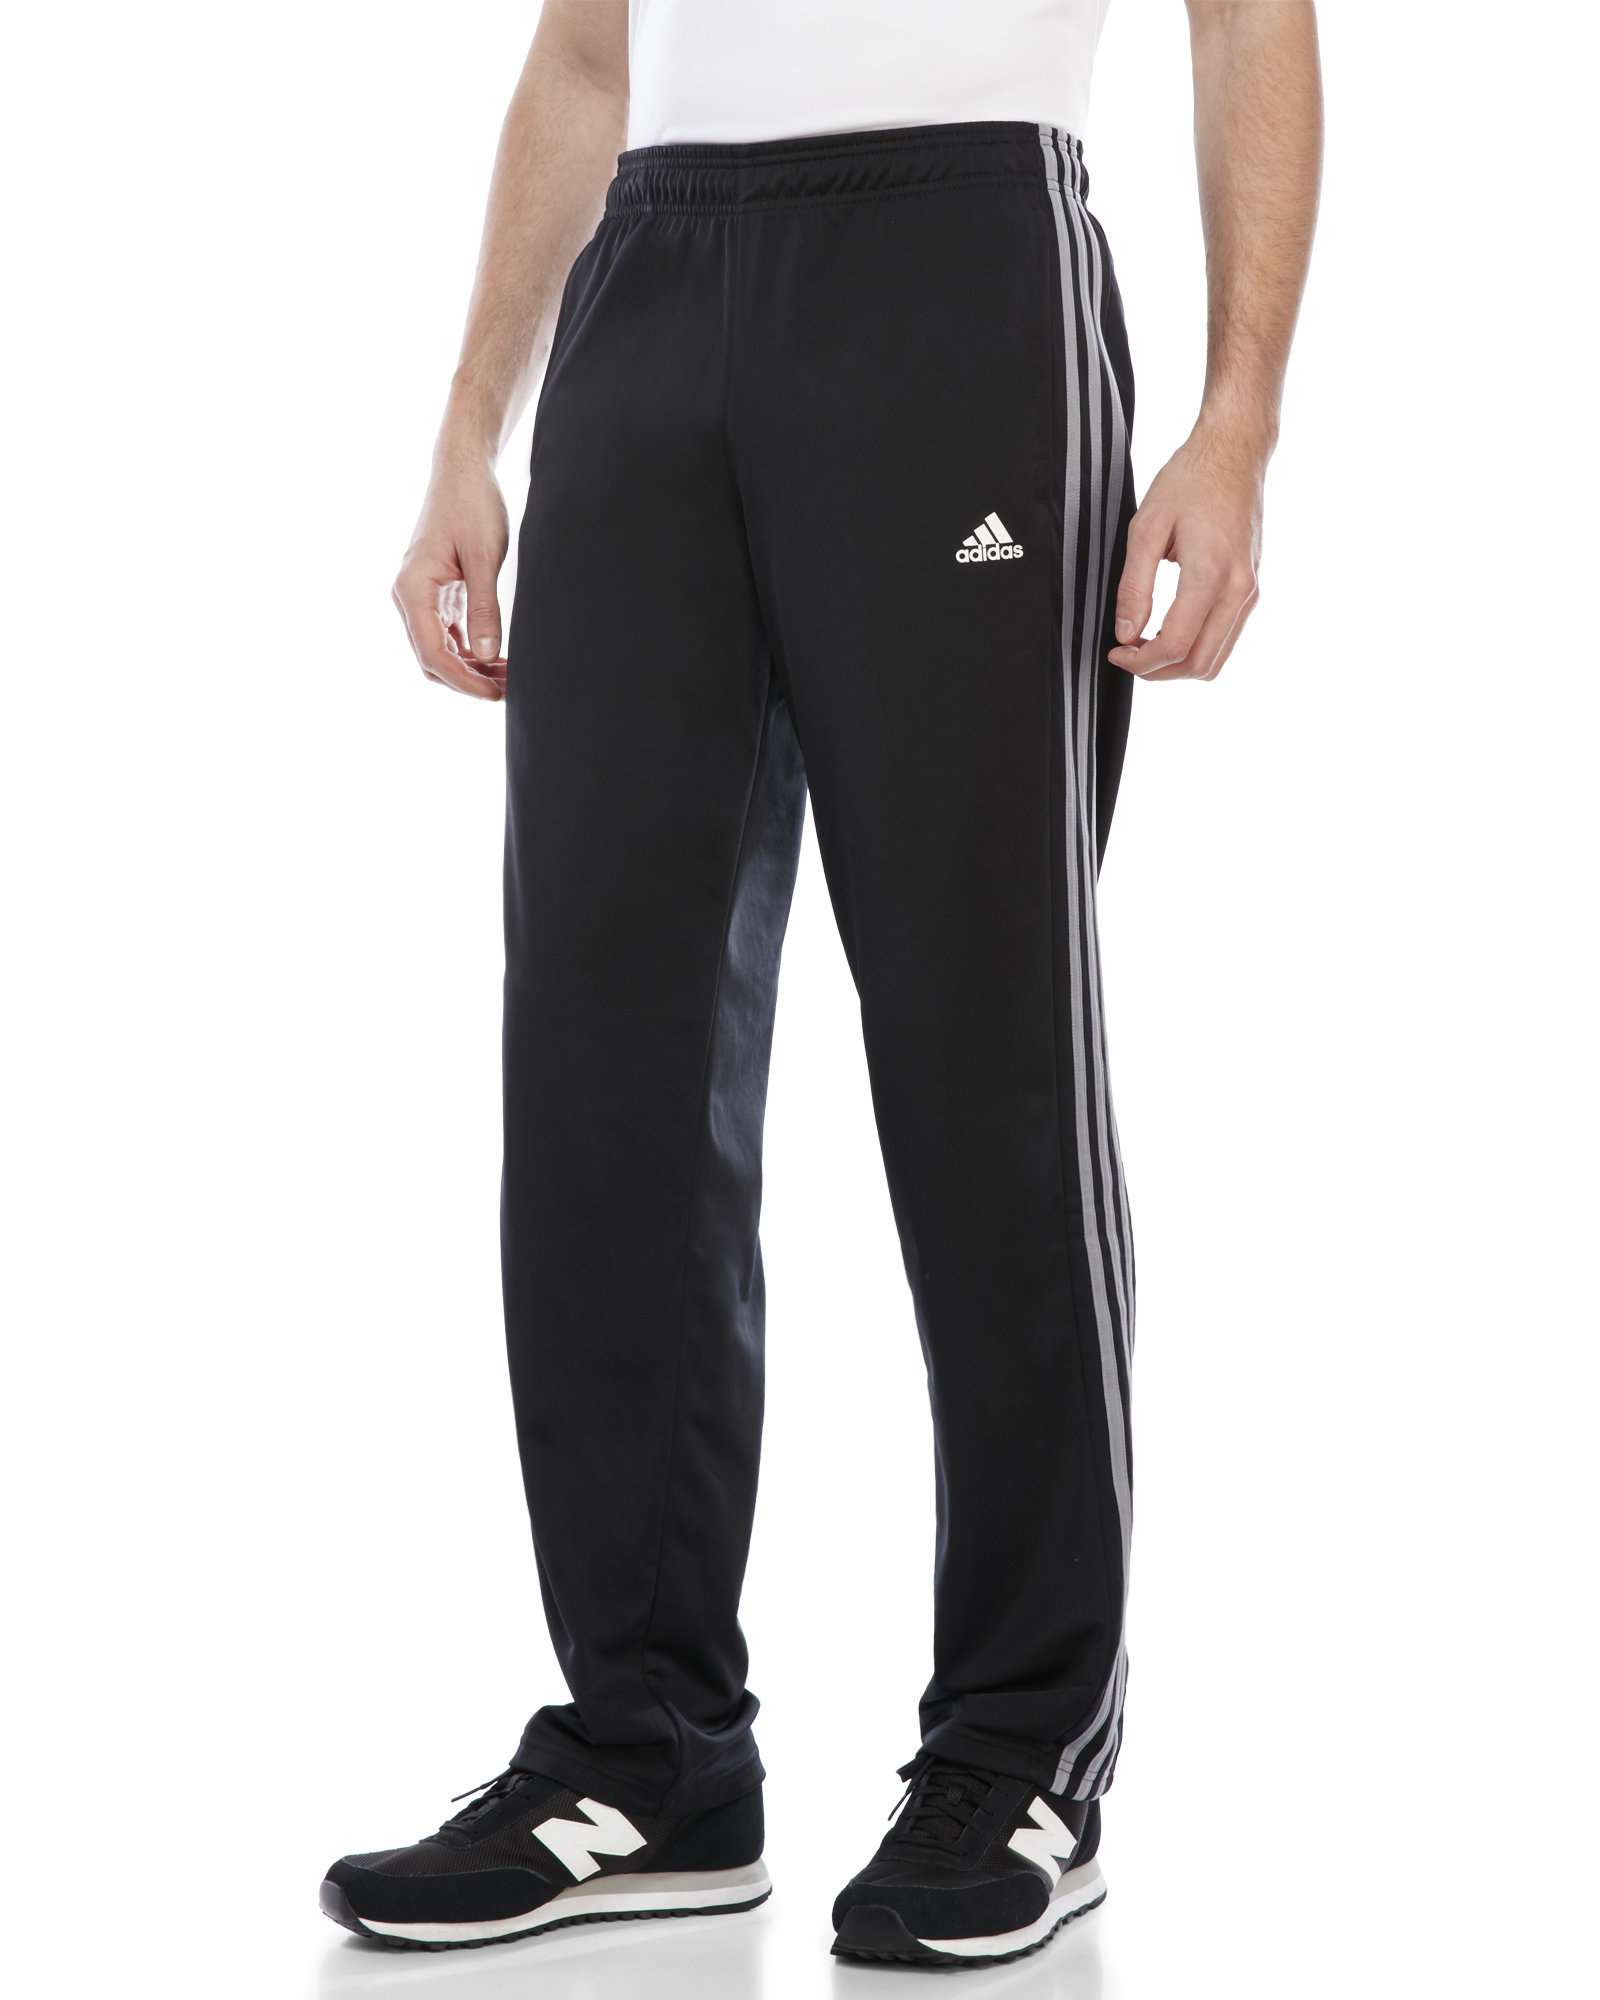 Lyst - Adidas Originals Essential Tricot Track Pants in Black for Men